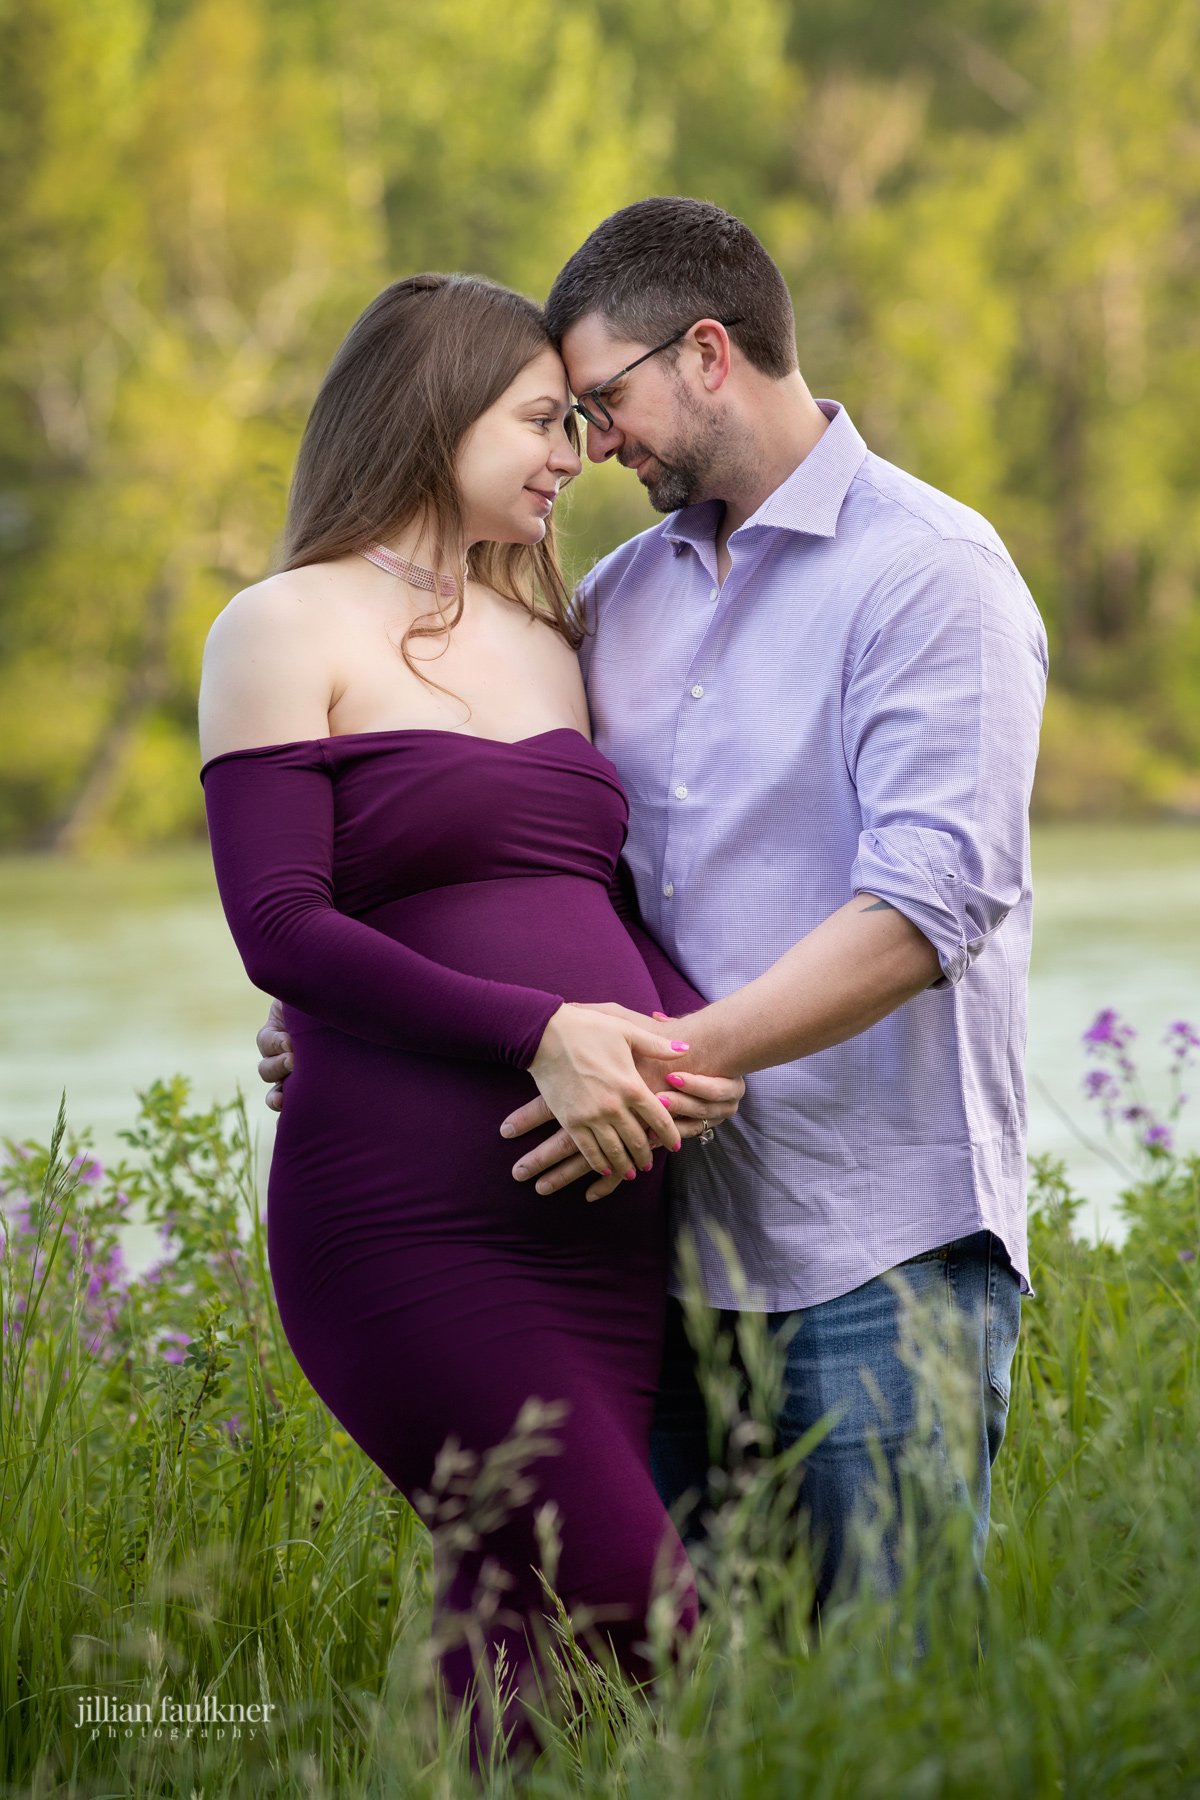 Maternity Photography Outdoors Portfolio - Calgary's #1 Newborn